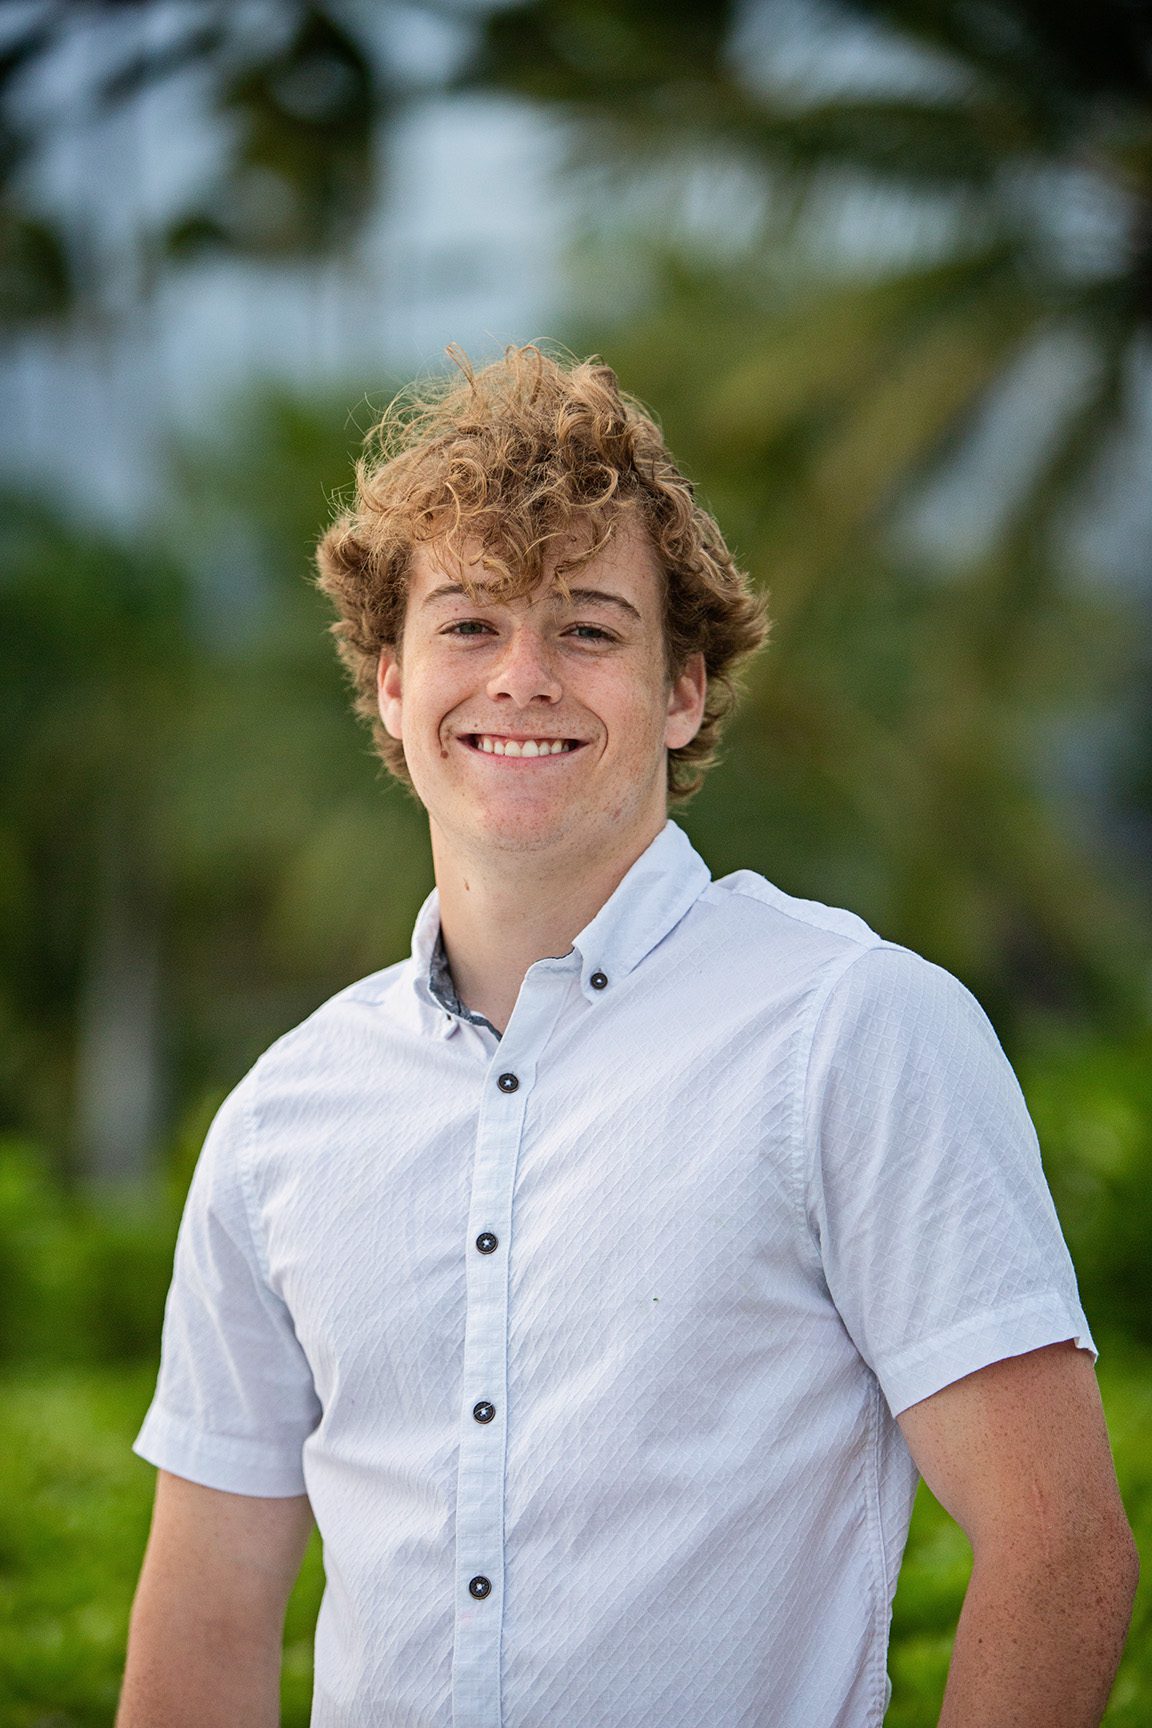 boy senior portrait on beach in Hawaii with palm trees